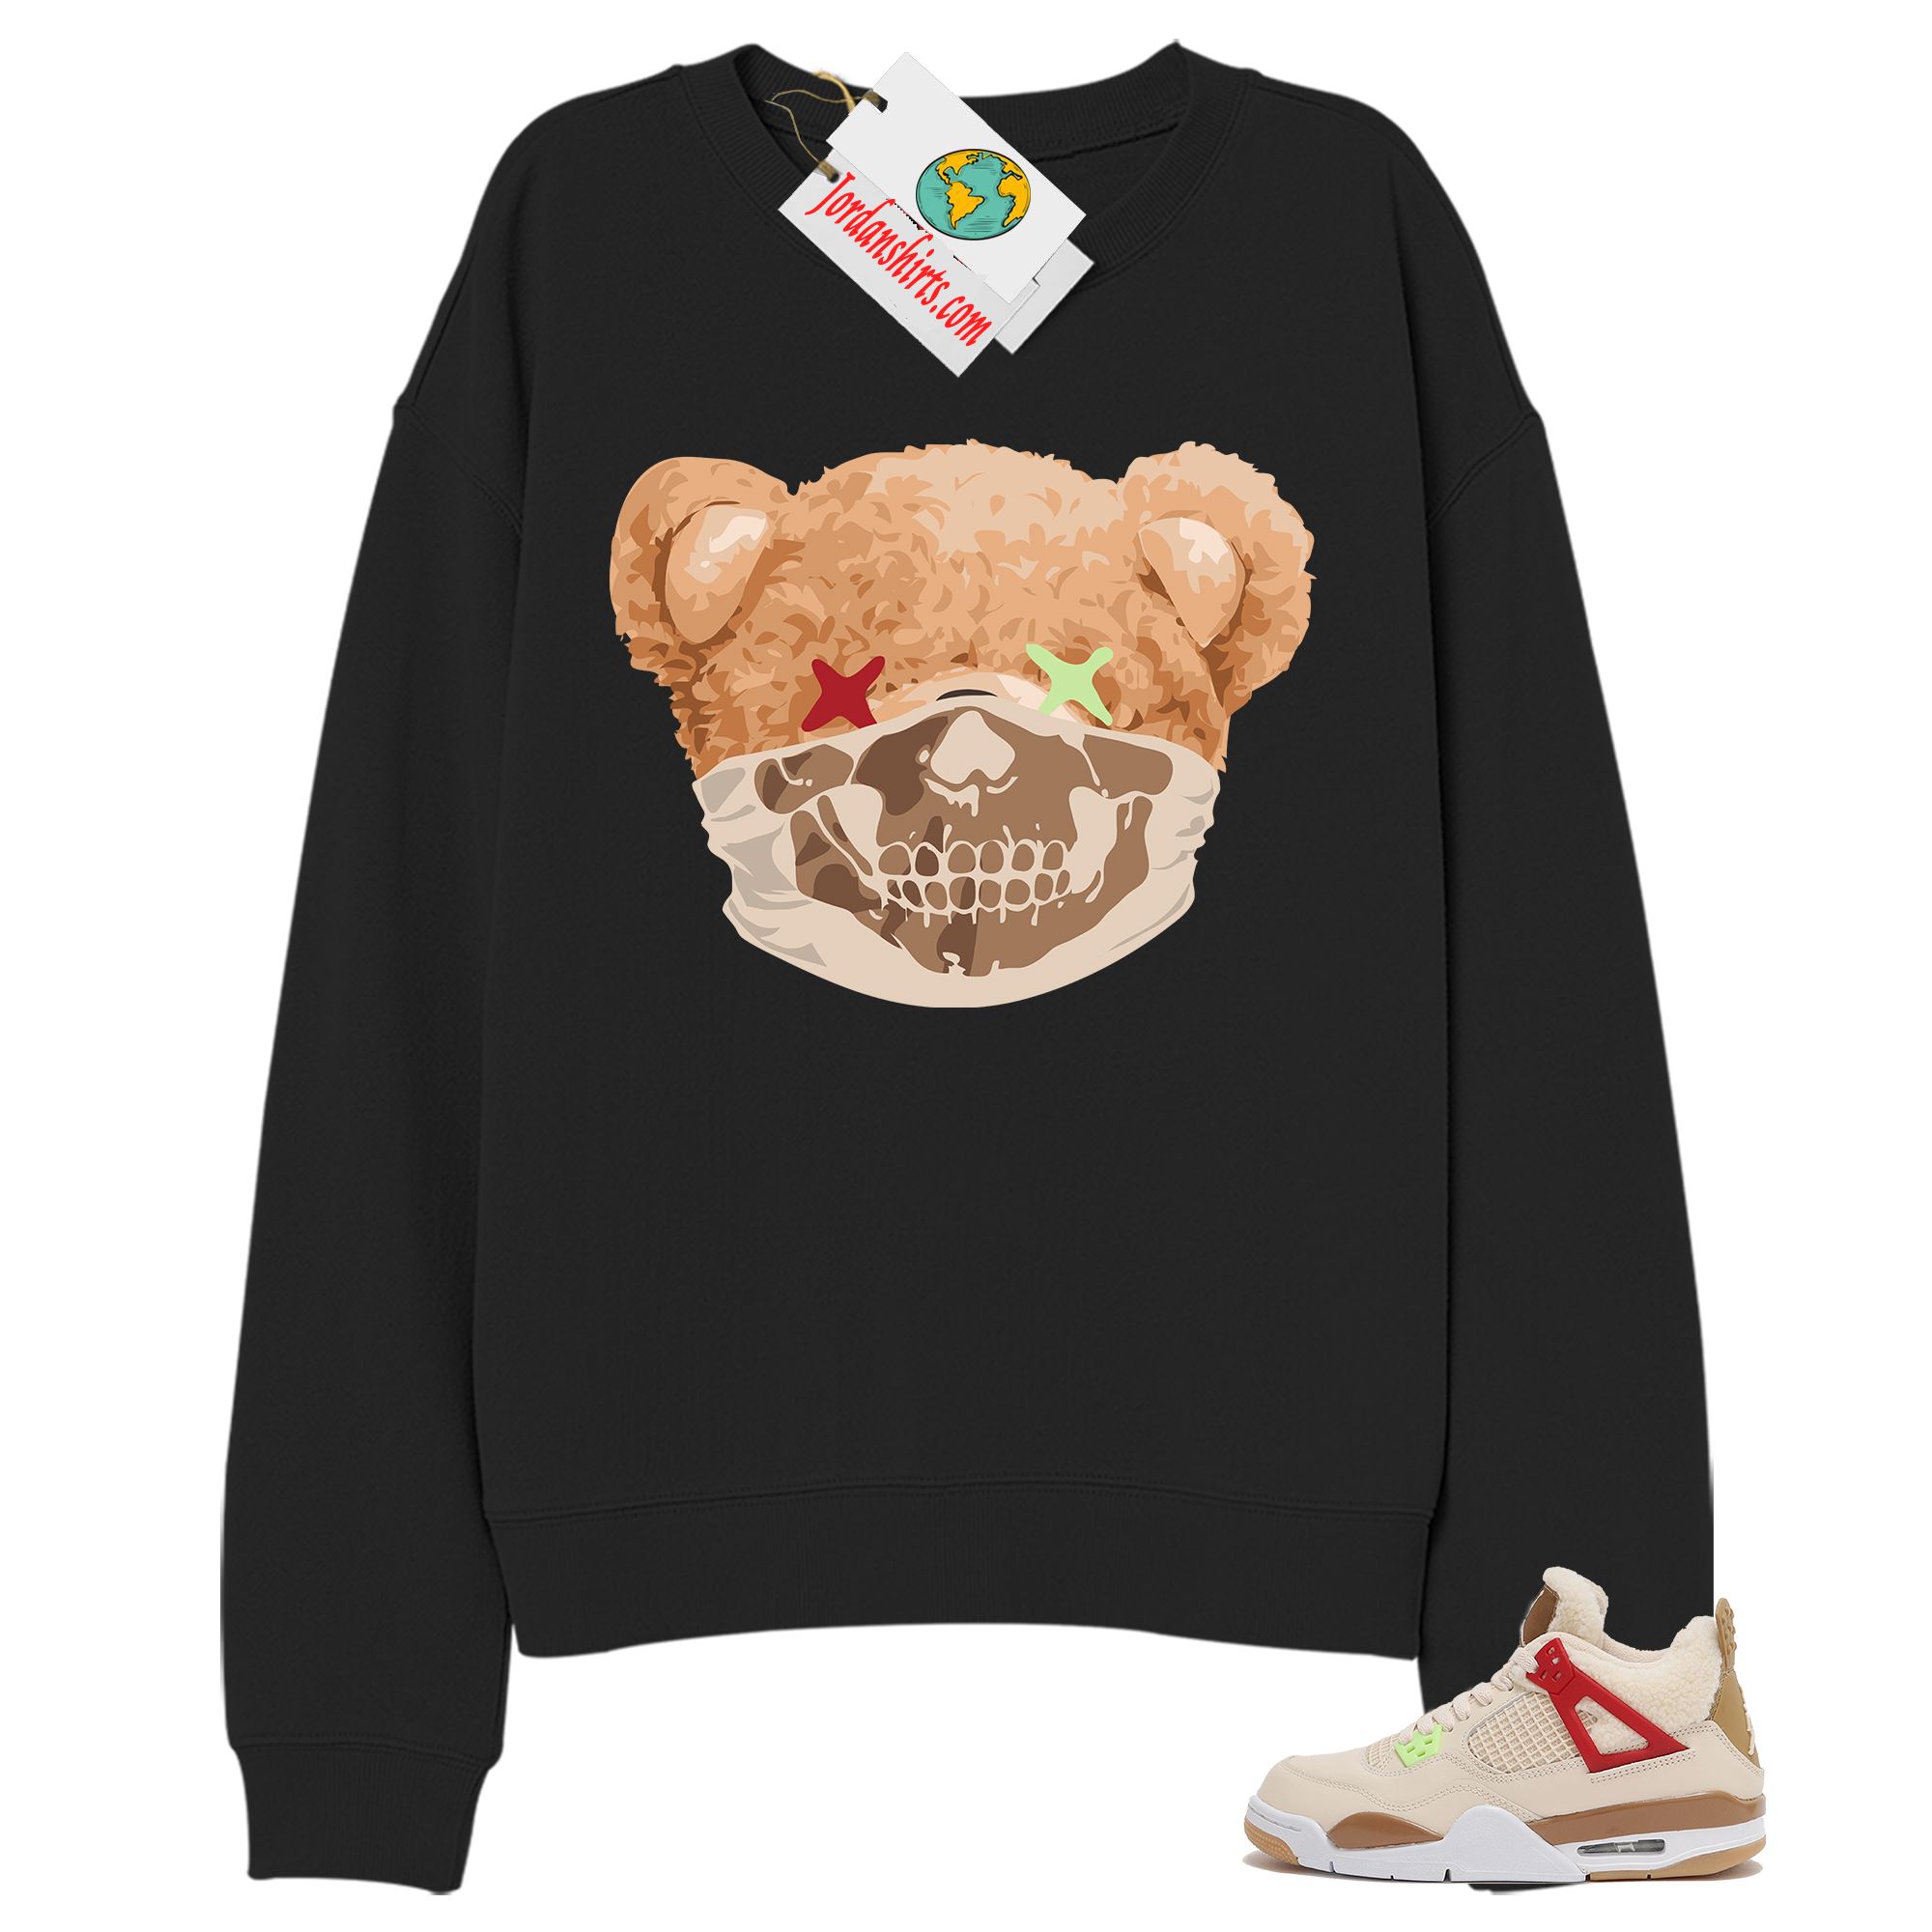 Jordan 4 Sweatshirt, Teddy Bear Skull Bandana Black Sweatshirt Air Jordan 4 Wild Things 4s Plus Size Up To 5xl